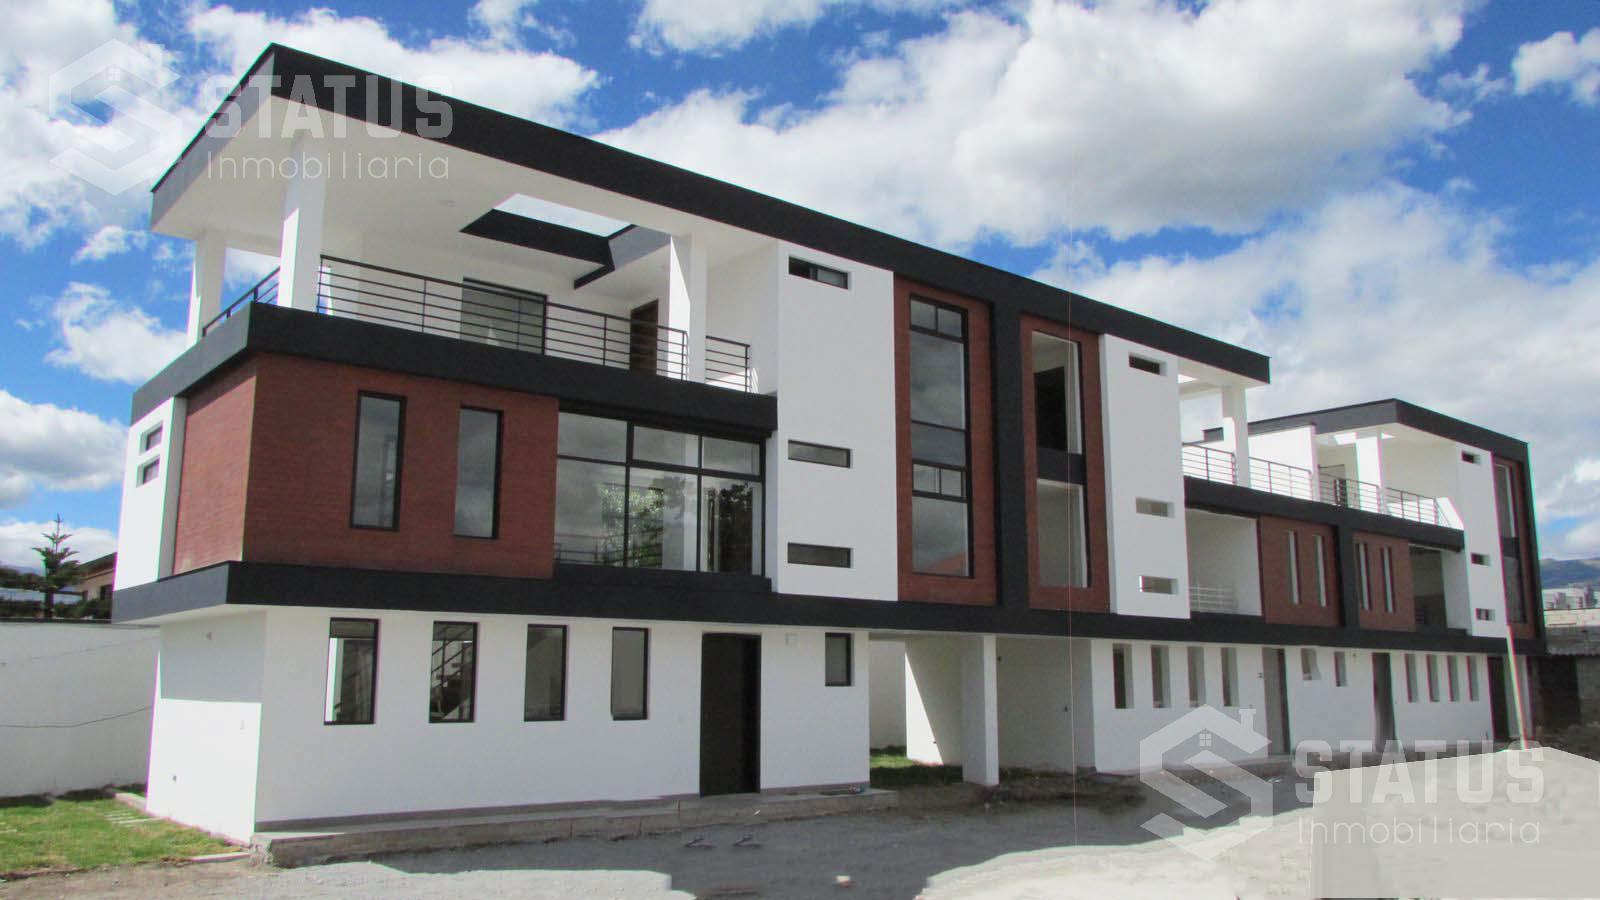 Se vende casa a estrenar de 3 Dorm., 2 Garajes, sector Sangolquí - Los Chillos, $127.500